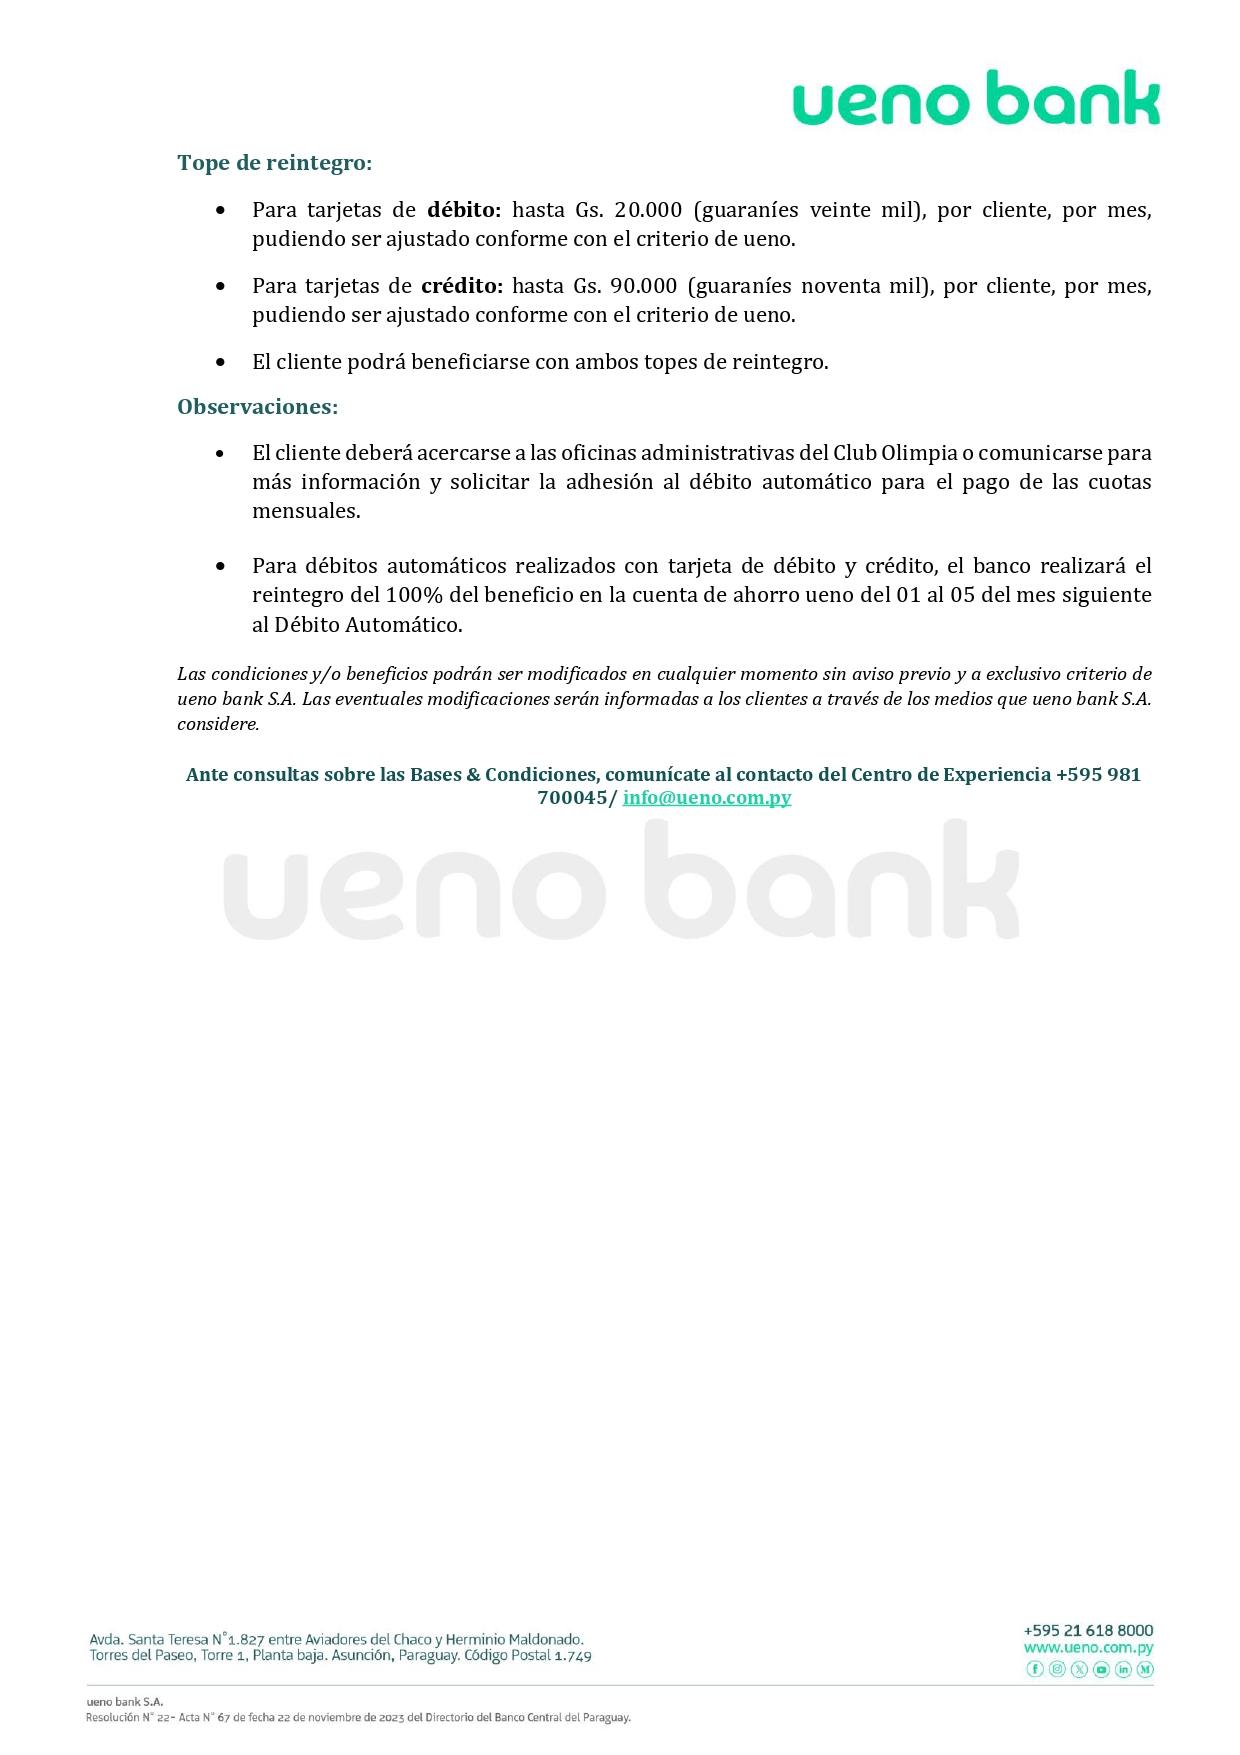 ByC - Debito automatico olimpia (1) (1)_page-0002.jpg